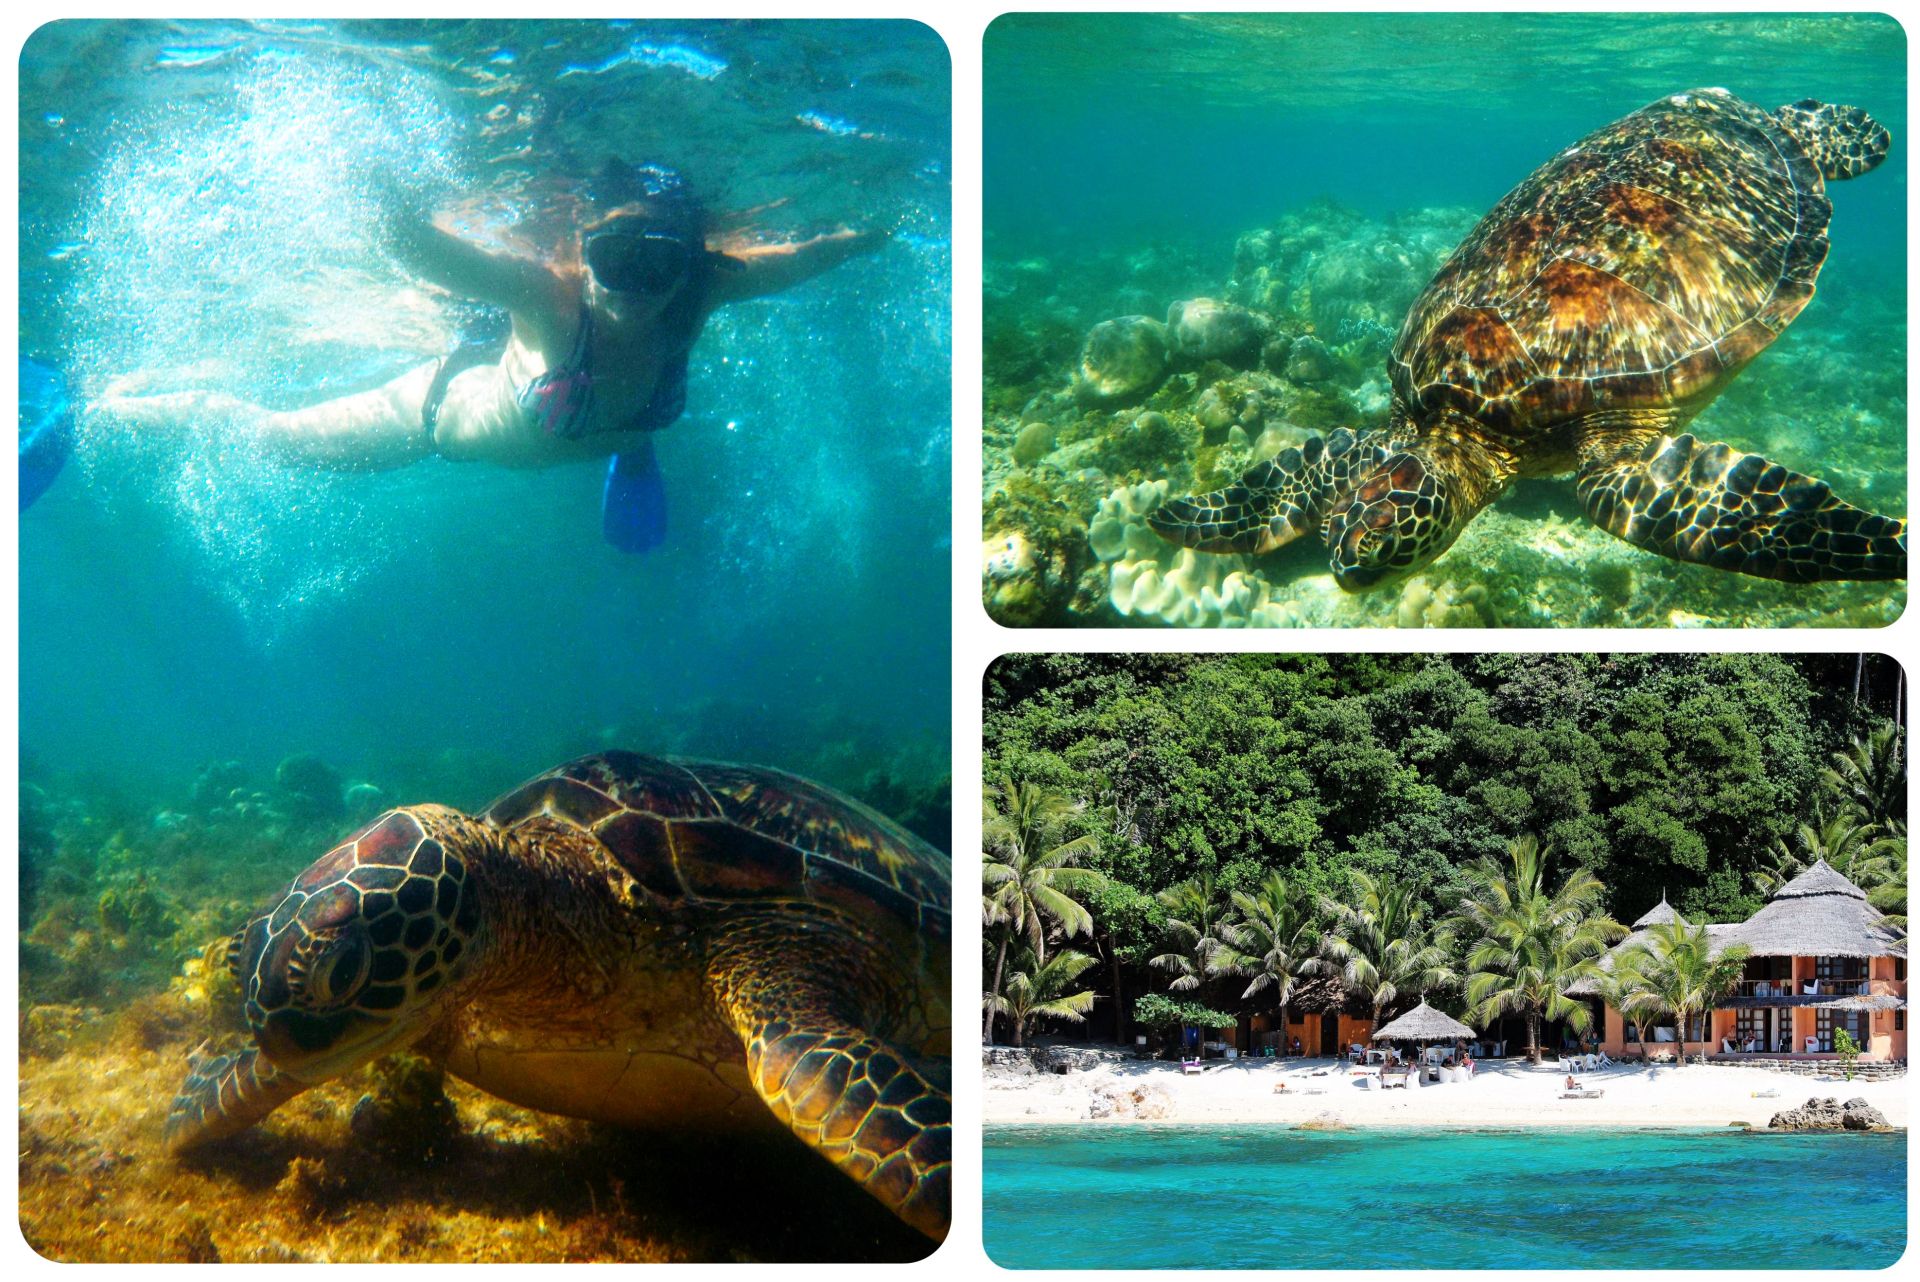 Swimming with sea turtles in Apo Island